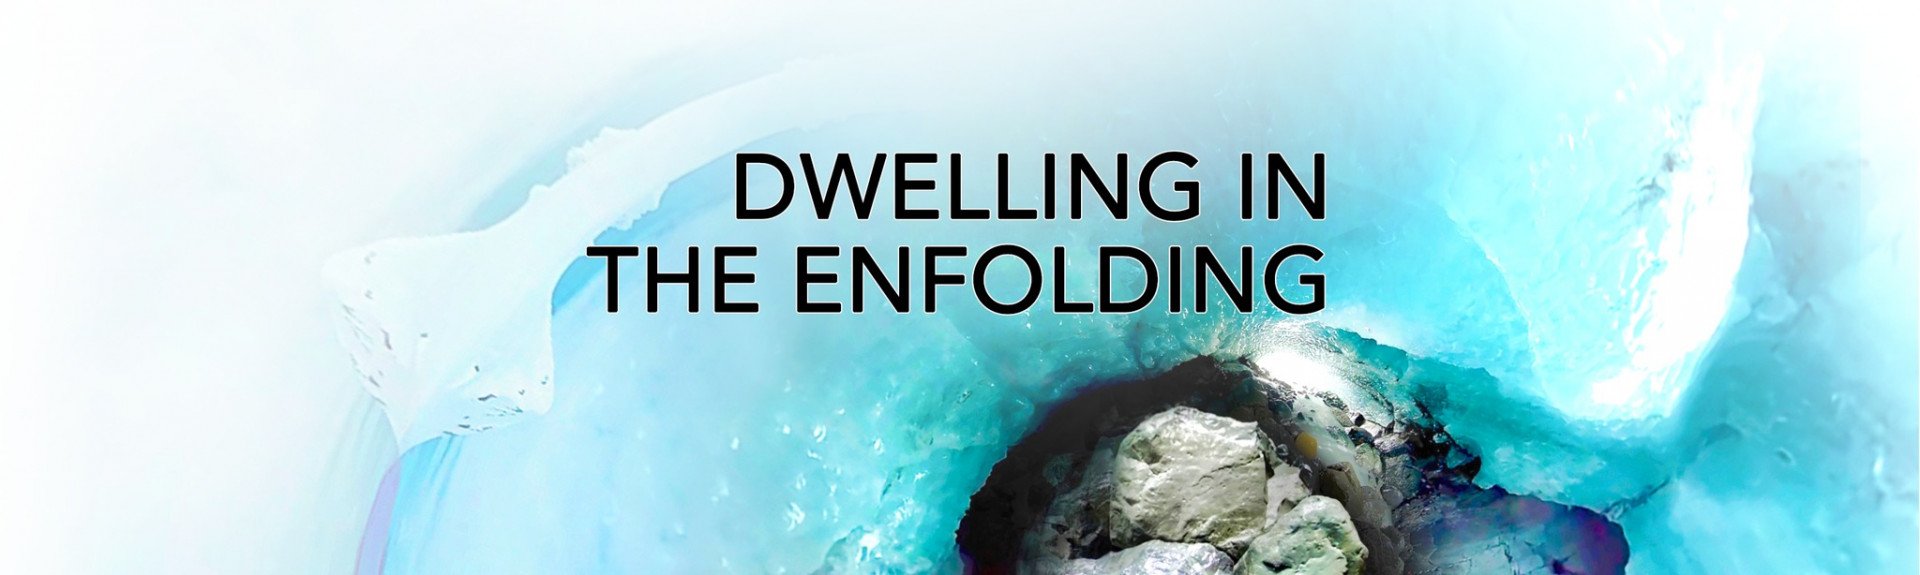 Dwelling in the Enfolding